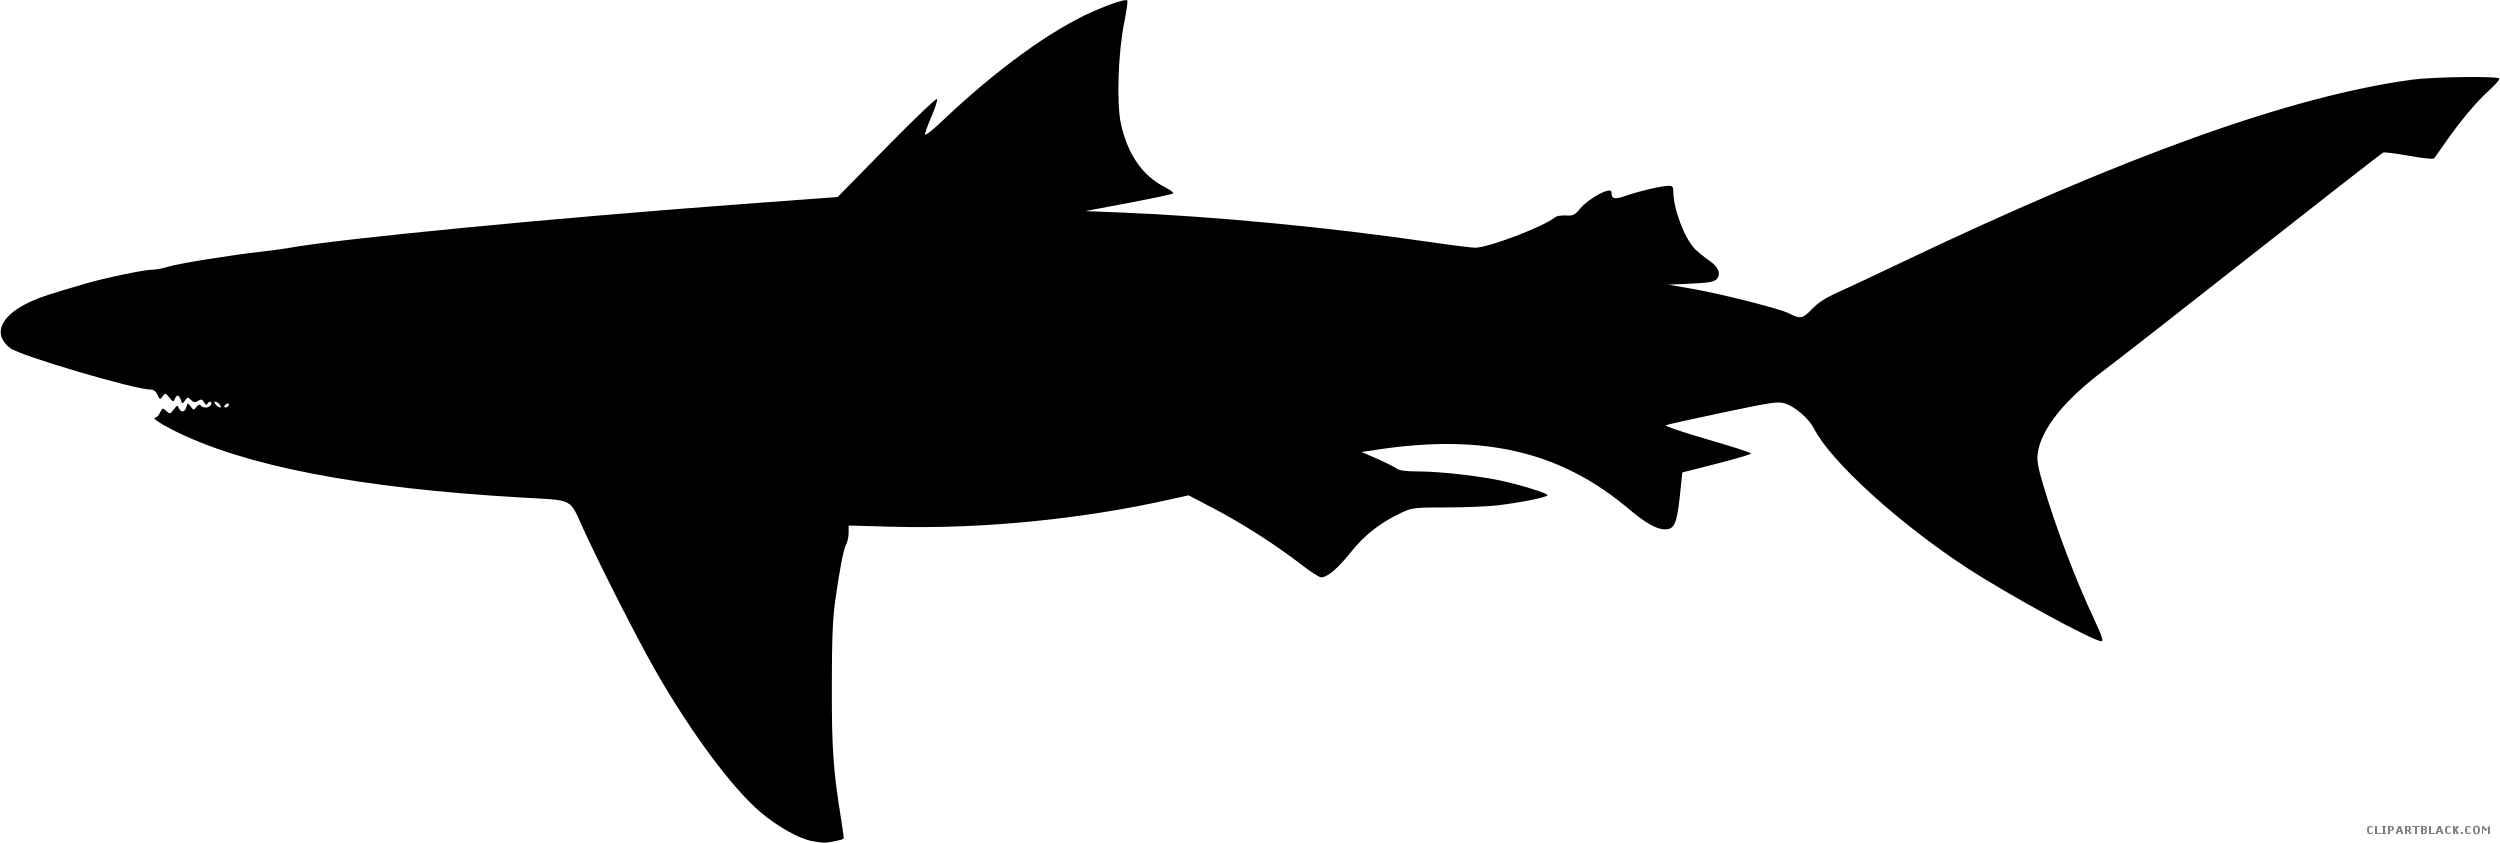 Medium Image - Batman Logo Png (2400x809)